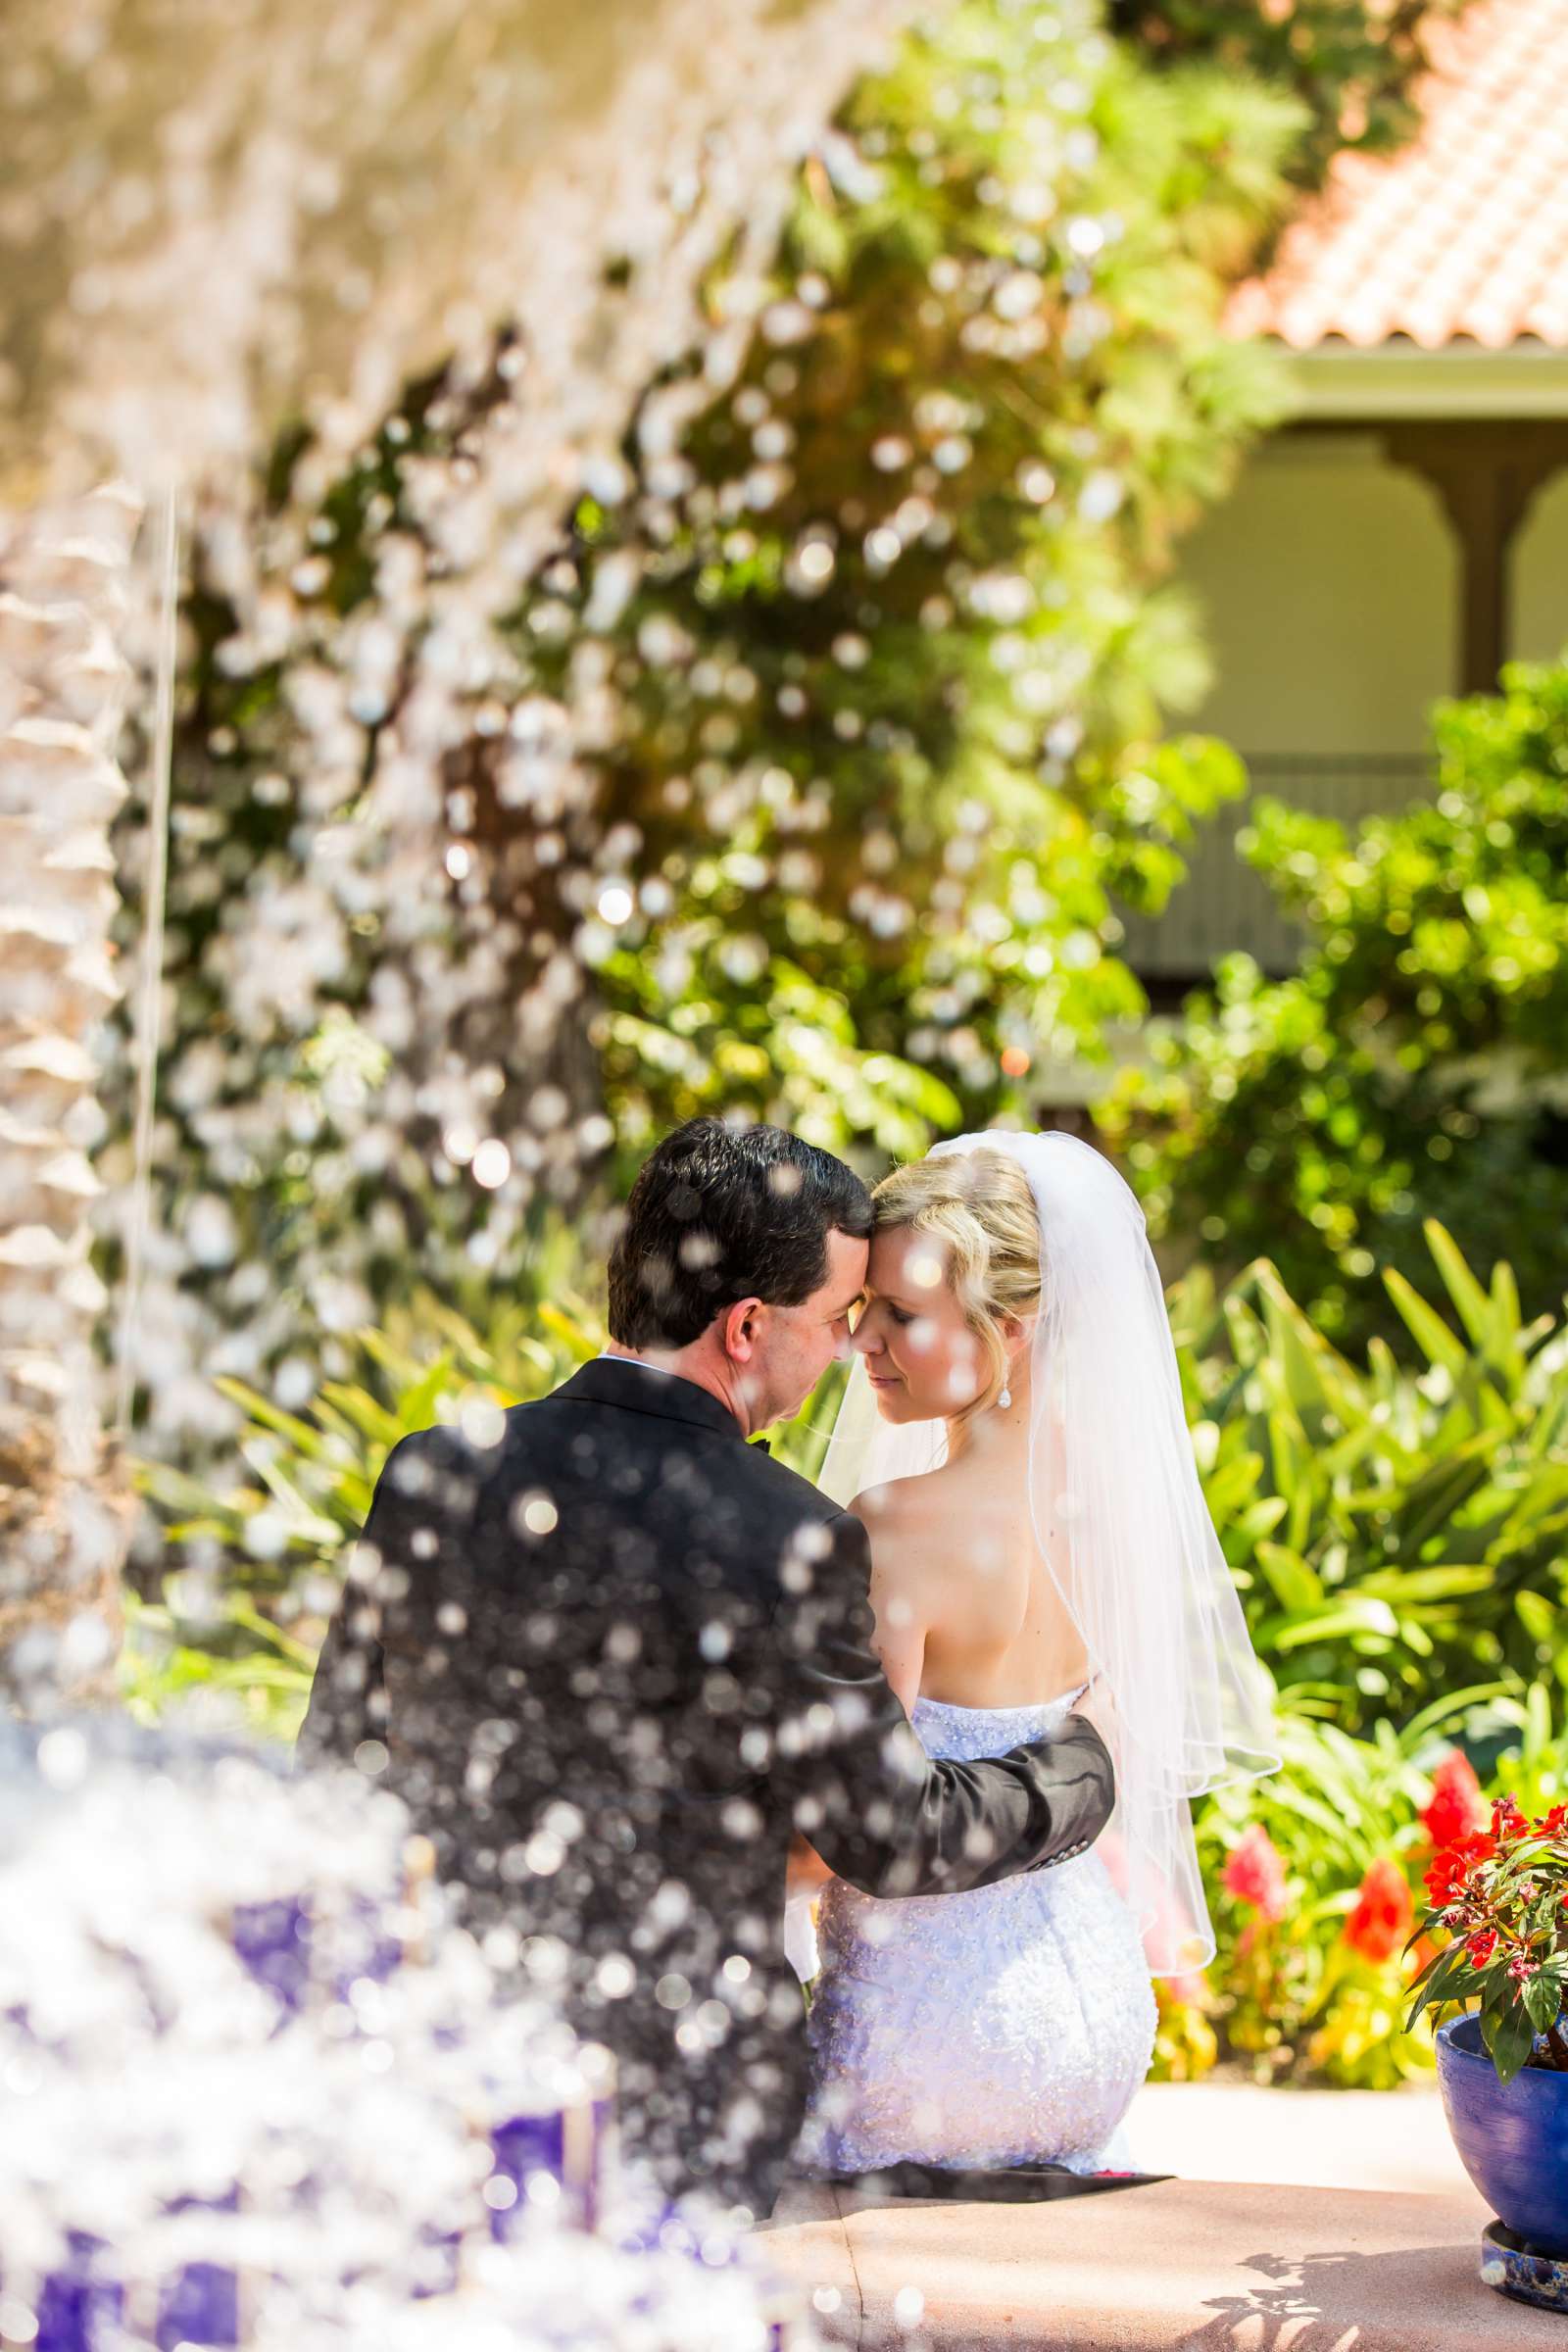 Omni La Costa Resort & Spa Wedding coordinated by Elements of Style, Irina and Brett Wedding Photo #14 by True Photography